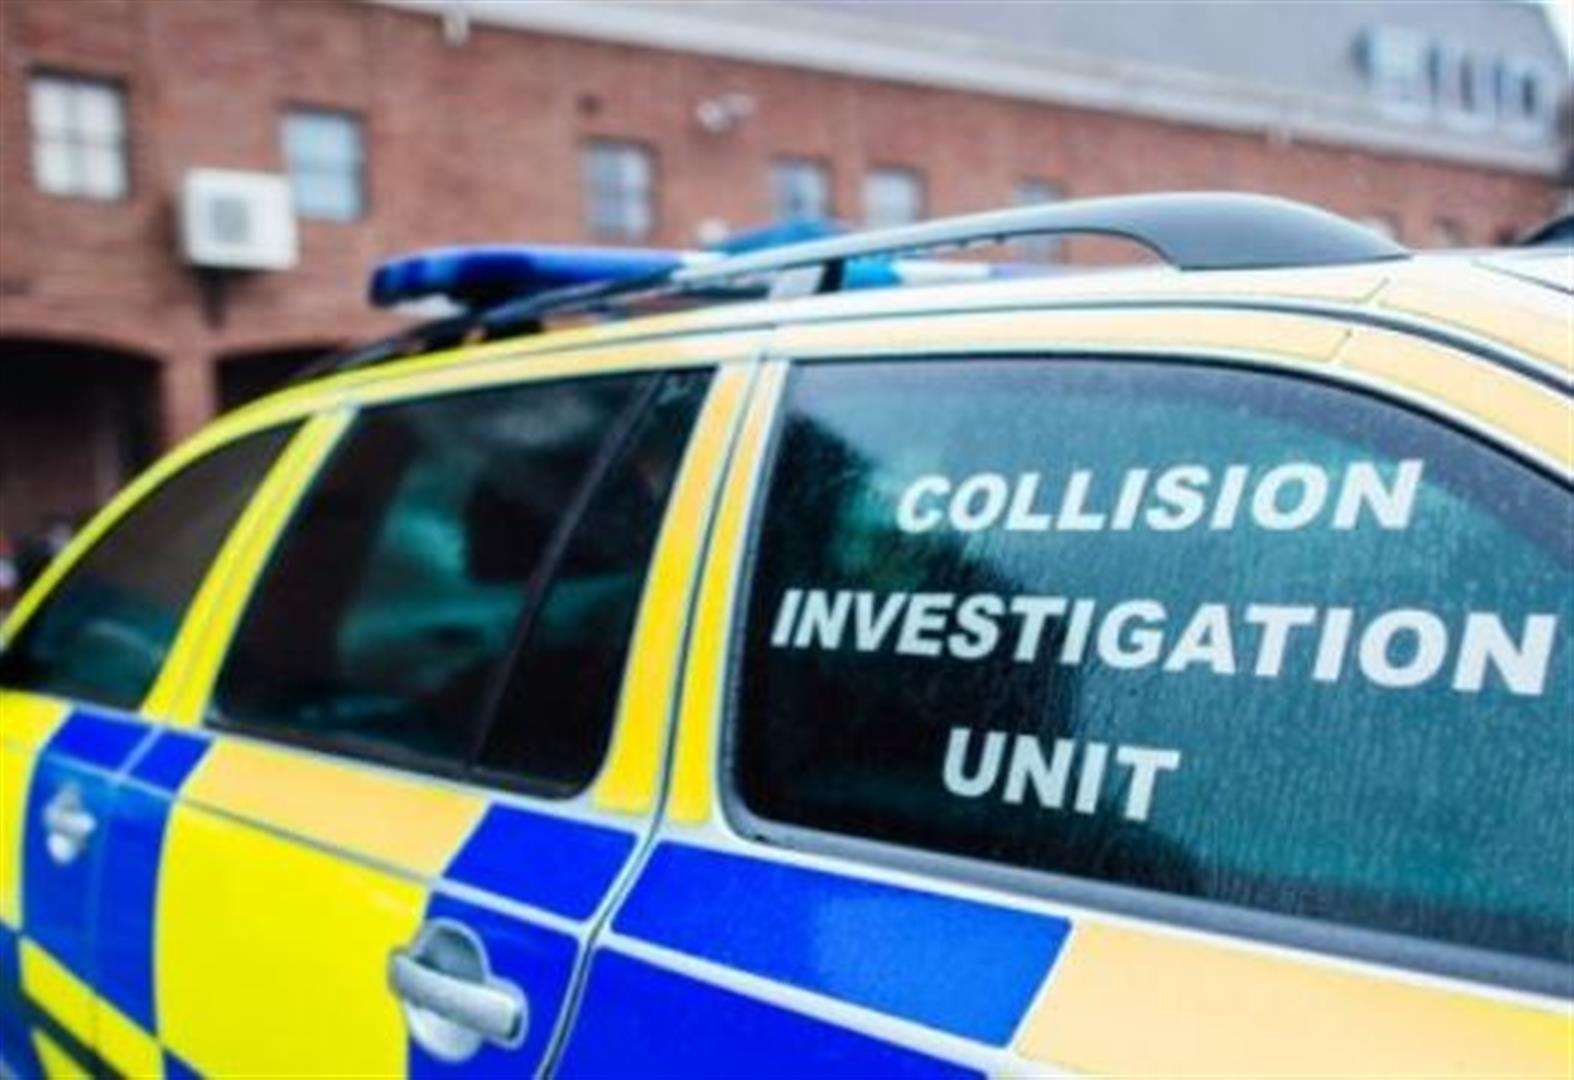 Kent Police collision investigation unit - Stock Image (2788435)